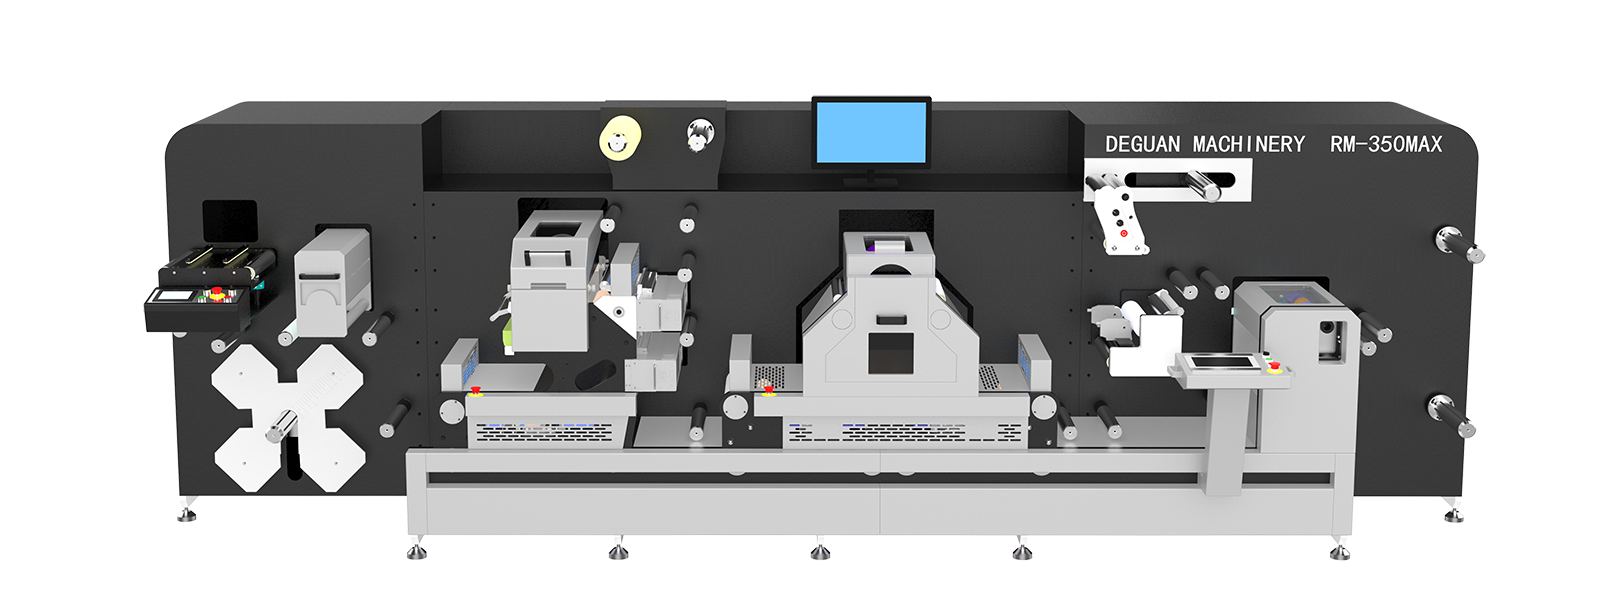 Modular machine high - speed batch printing die - cutting